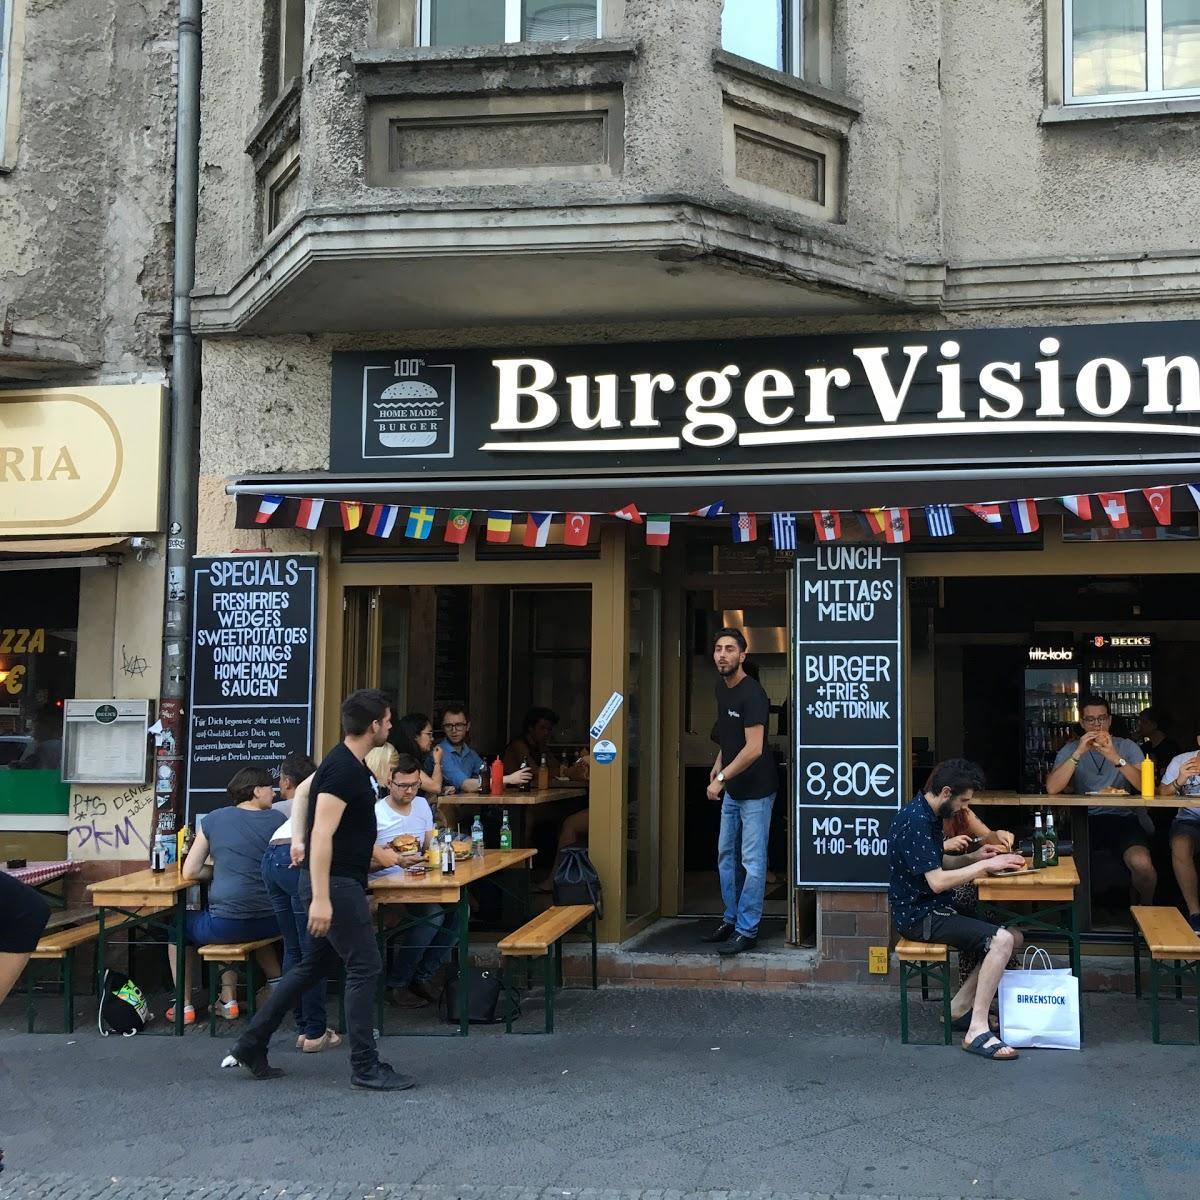 Restaurant "Burgervision" in Berlin